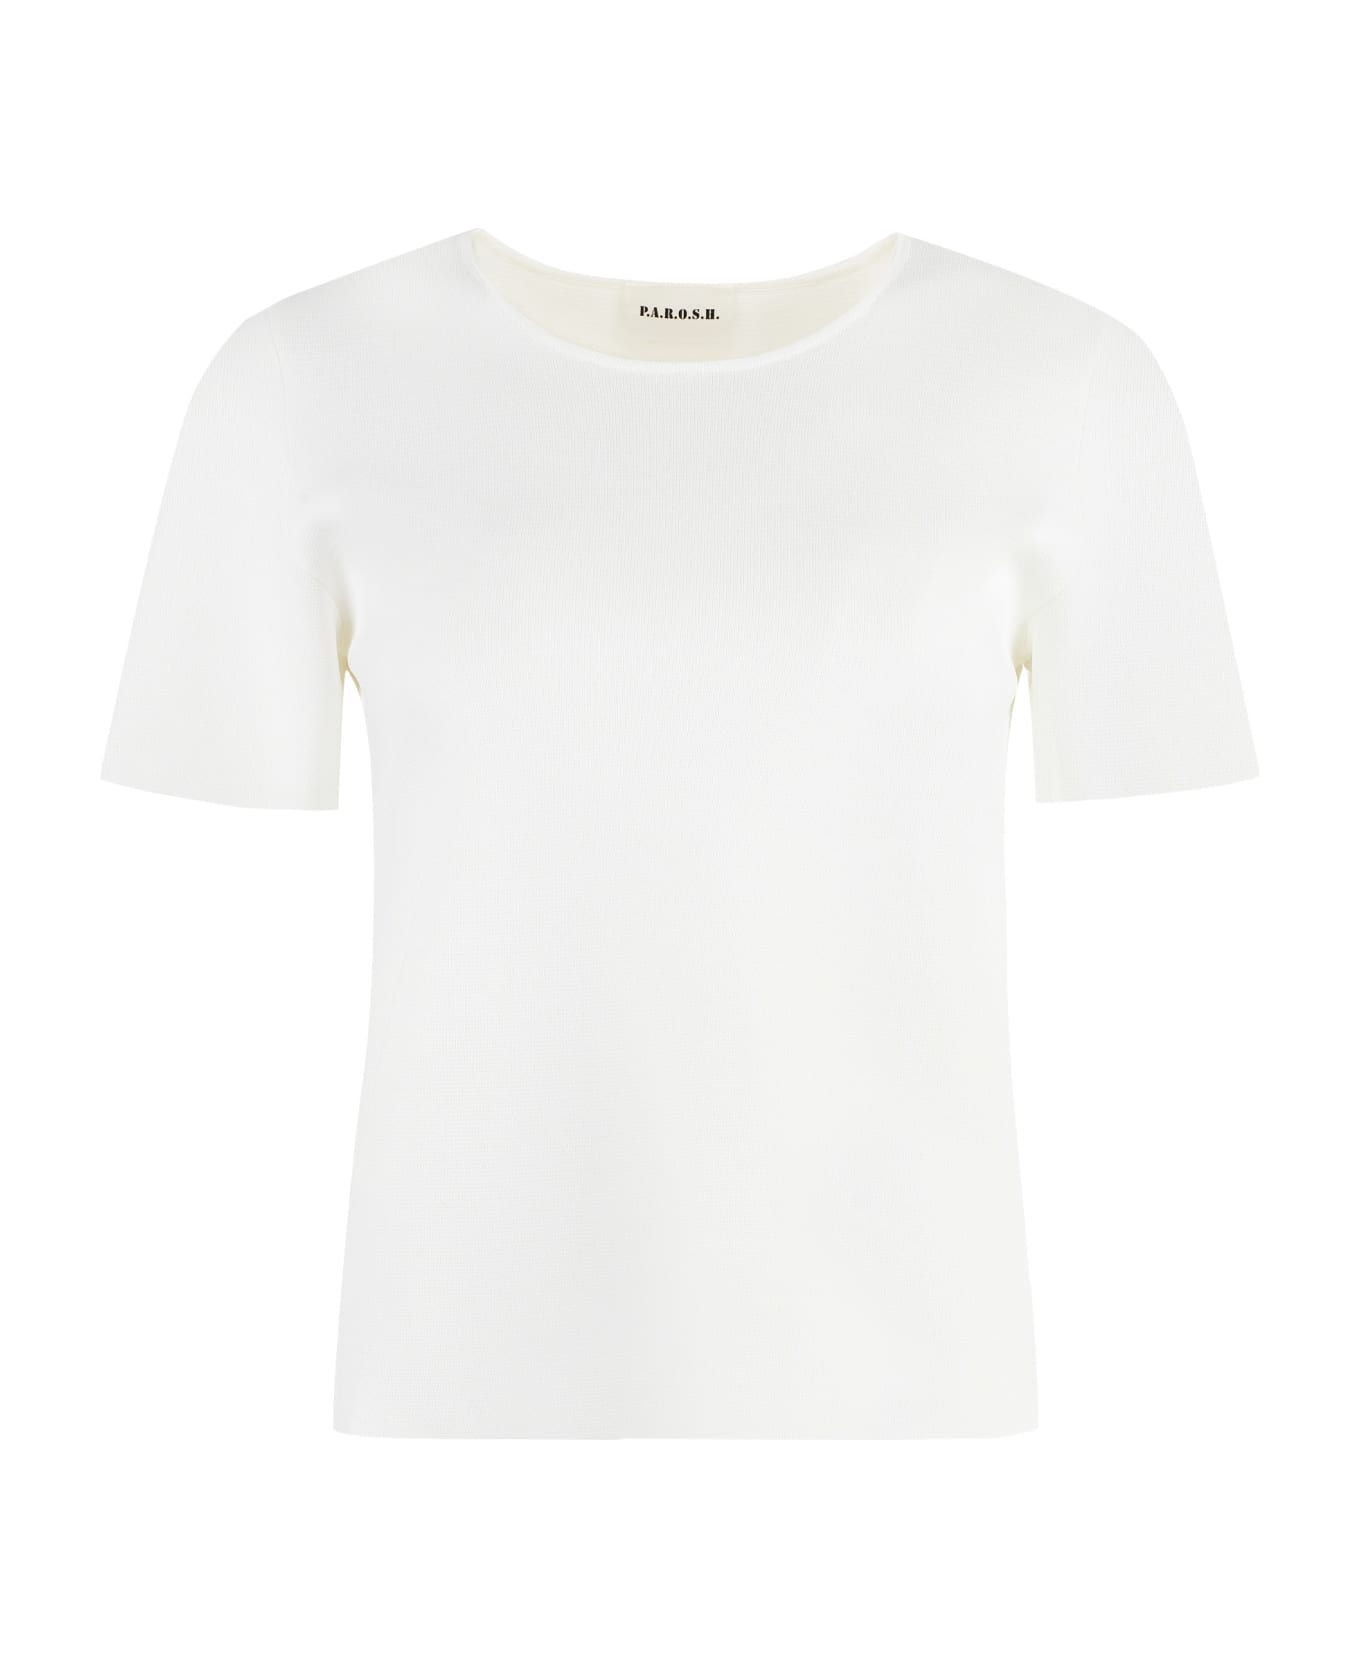 Parosh Knitted T-shirt - White Tシャツ